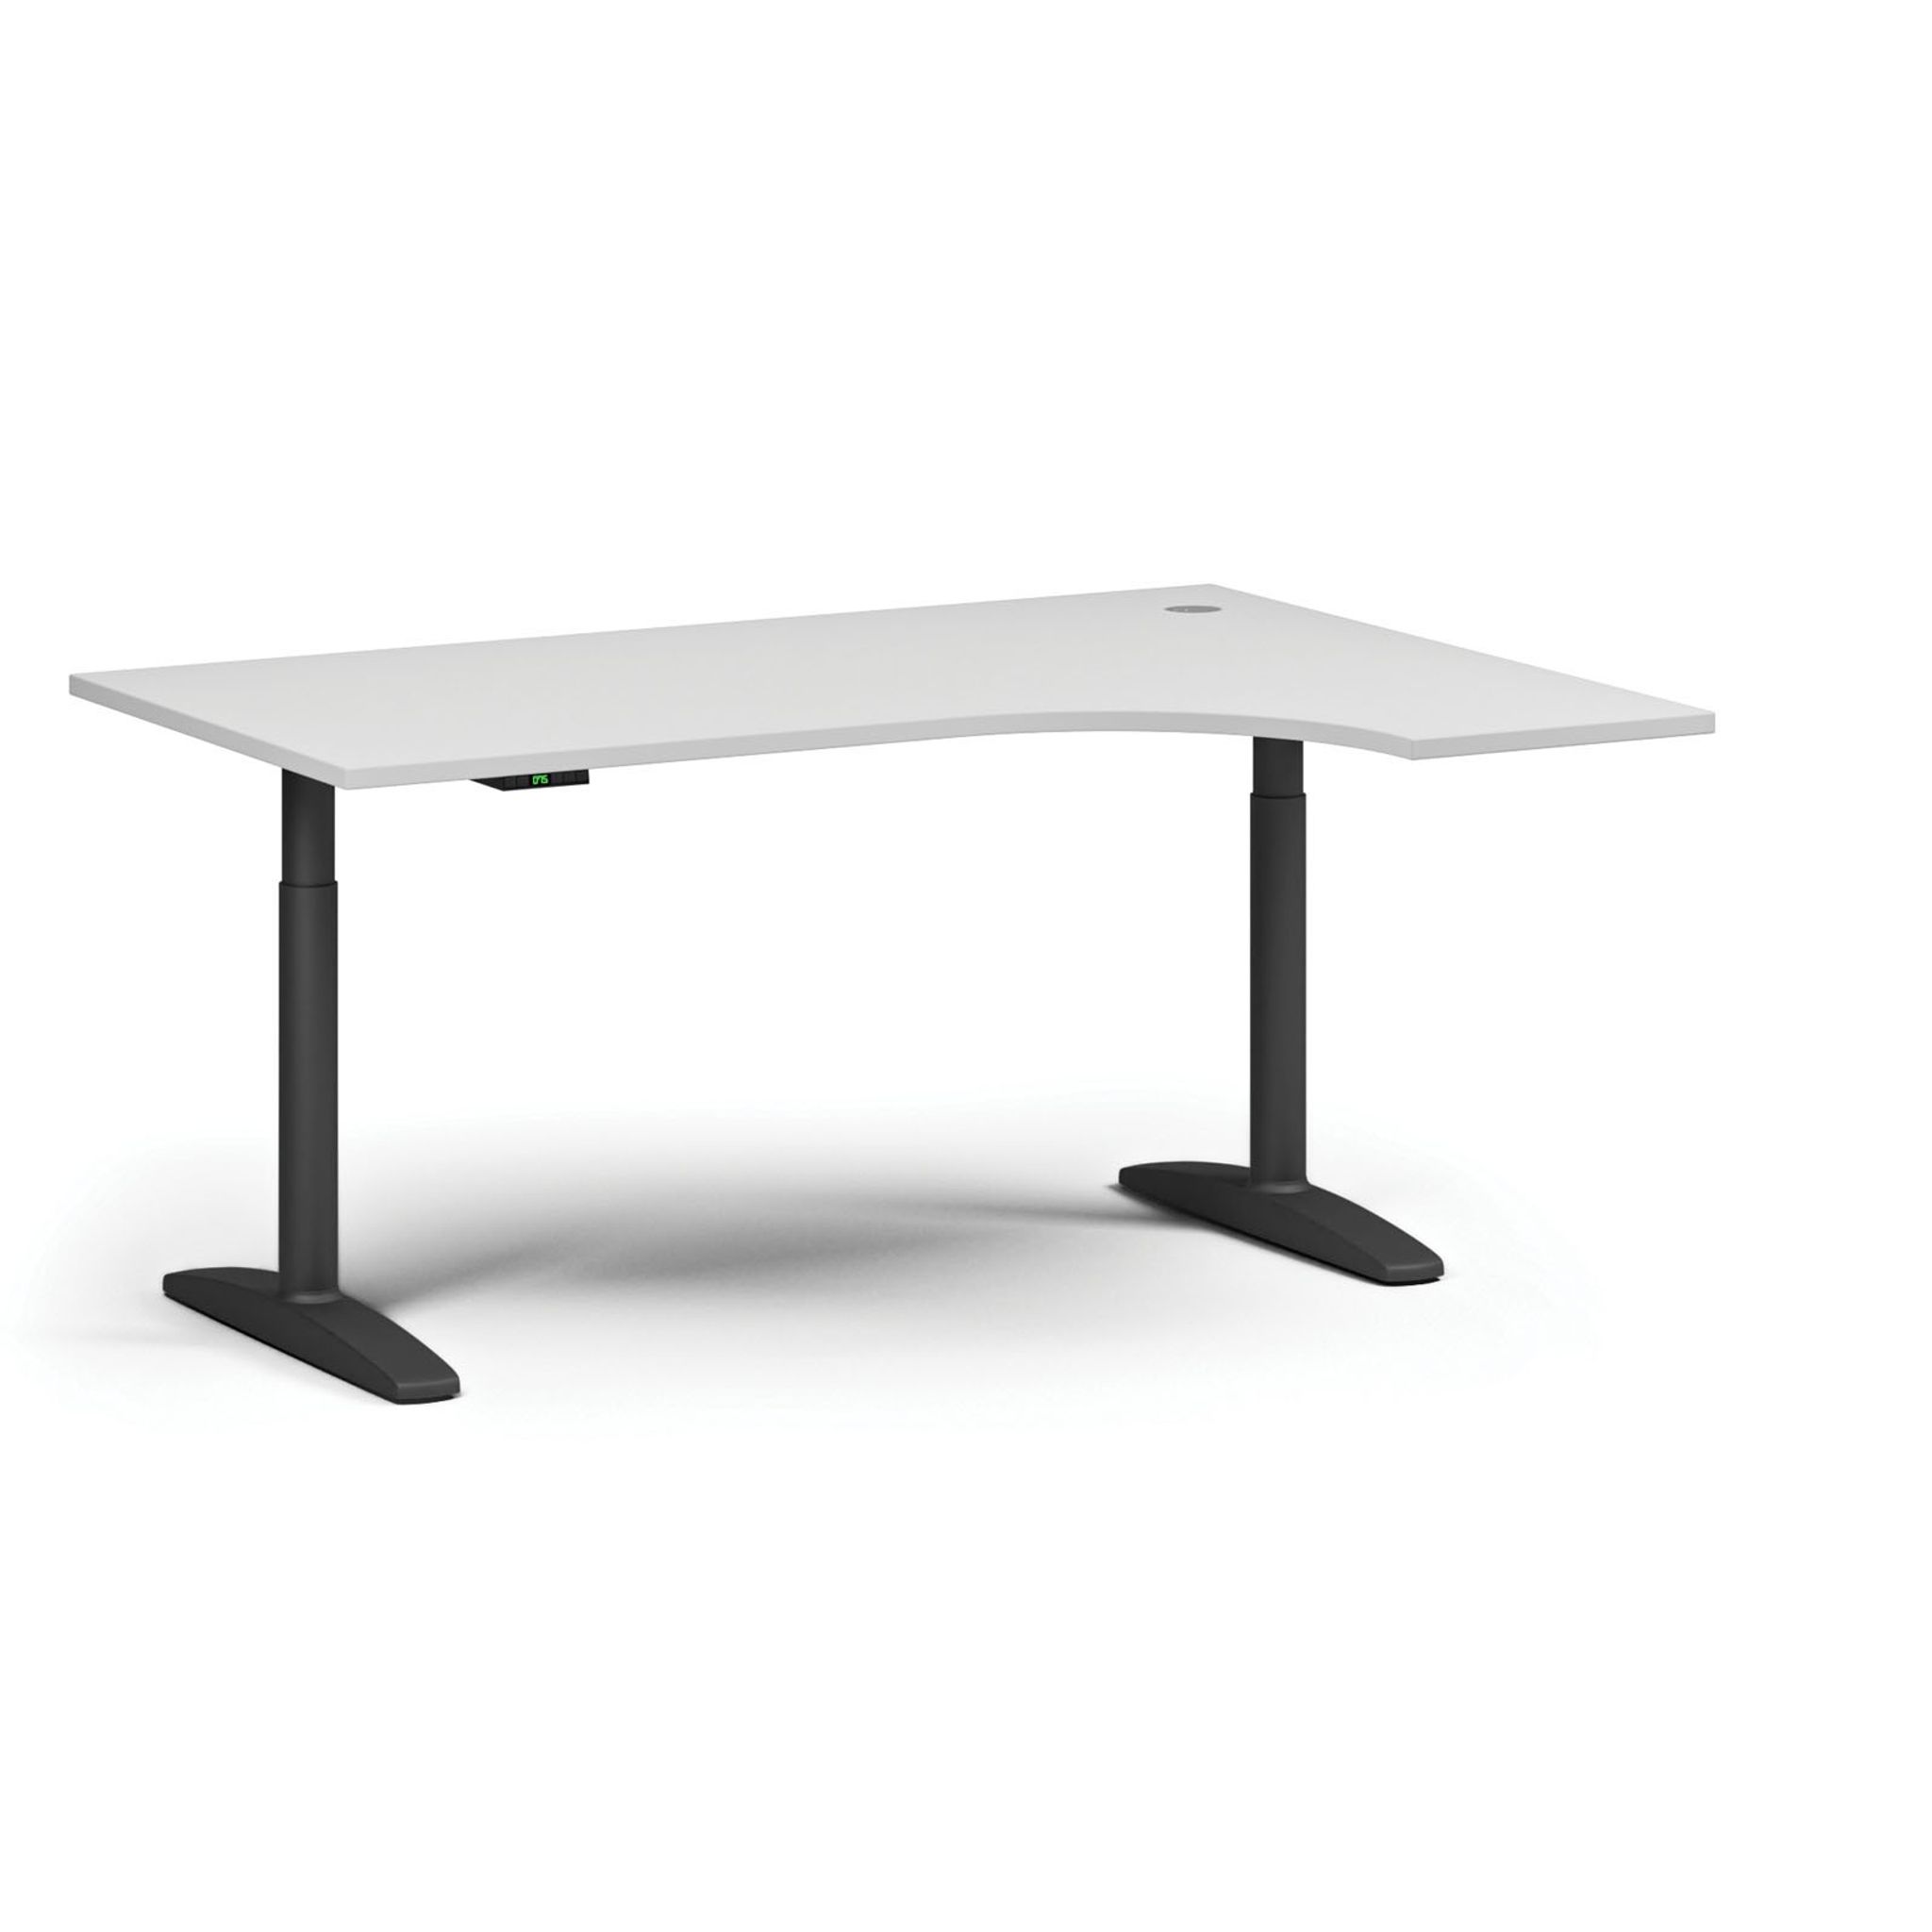 Výškově nastavitelný stůl OBOL, elektrický, 675-1325 mm, rohový pravý, deska 1600x1200 mm, černá zaoblená podnož, bílá